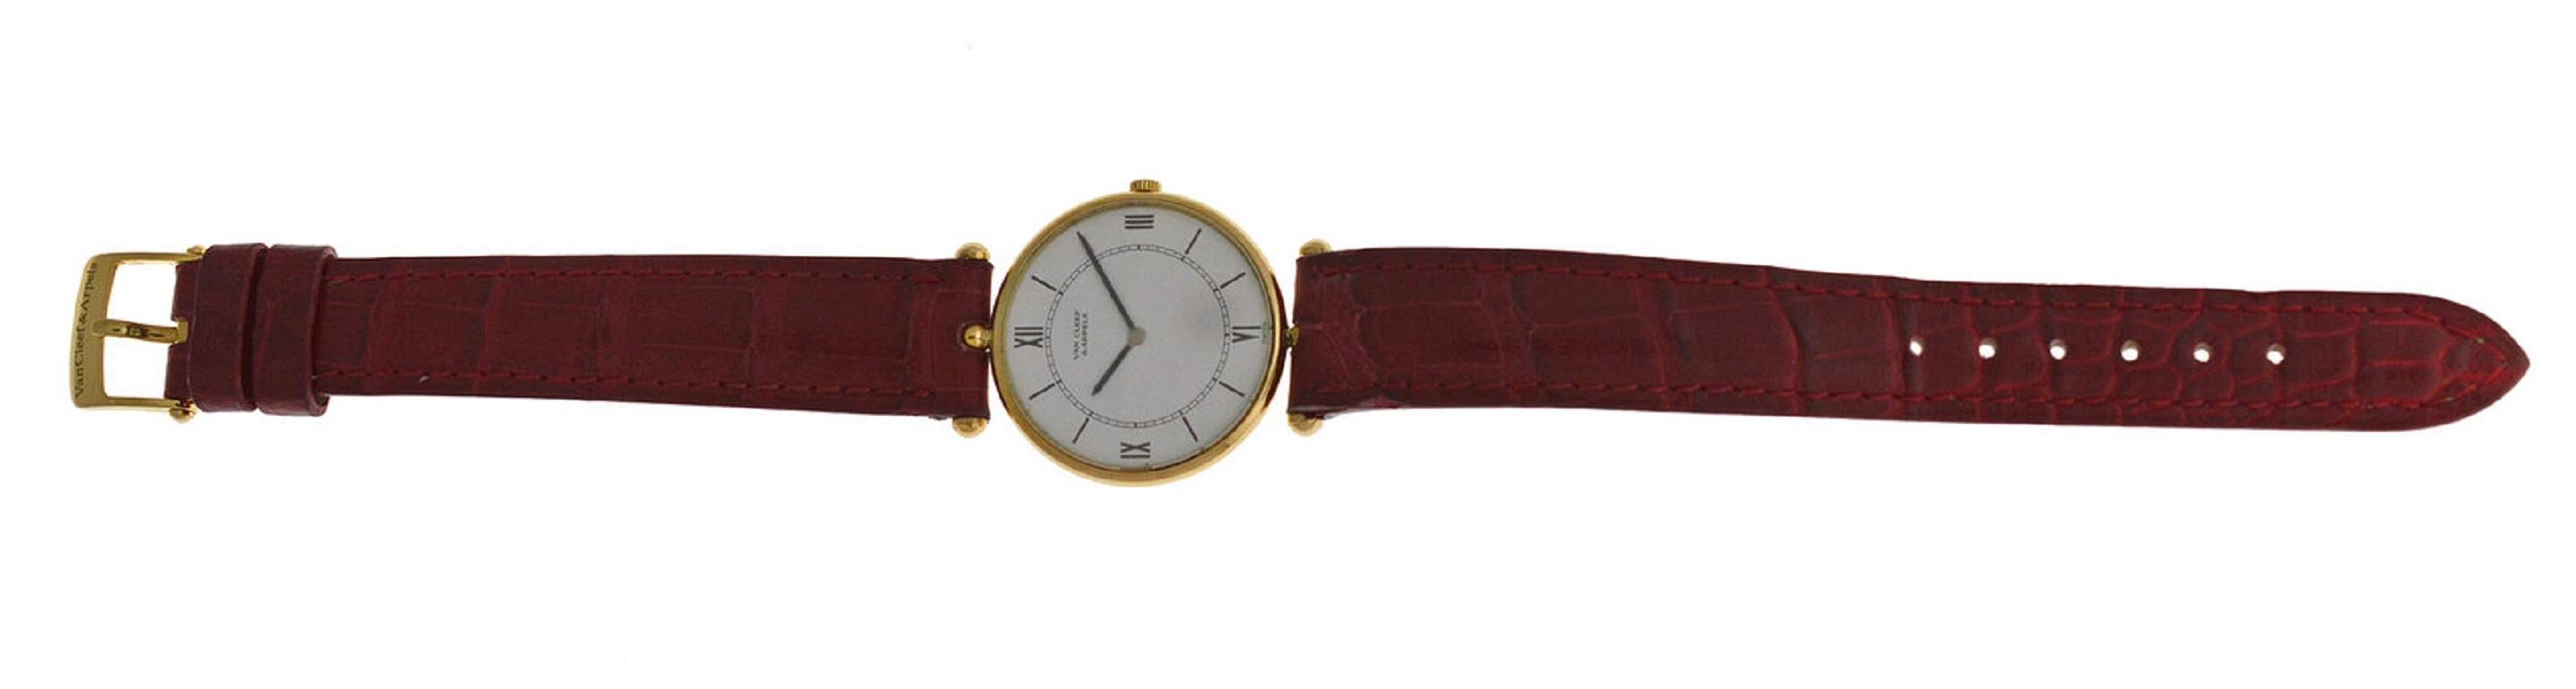 Ladies Van Cleef & Arpels Ref. 9065 Solid 18 Karat Yellow Gold Mechanical Watch For Sale 4